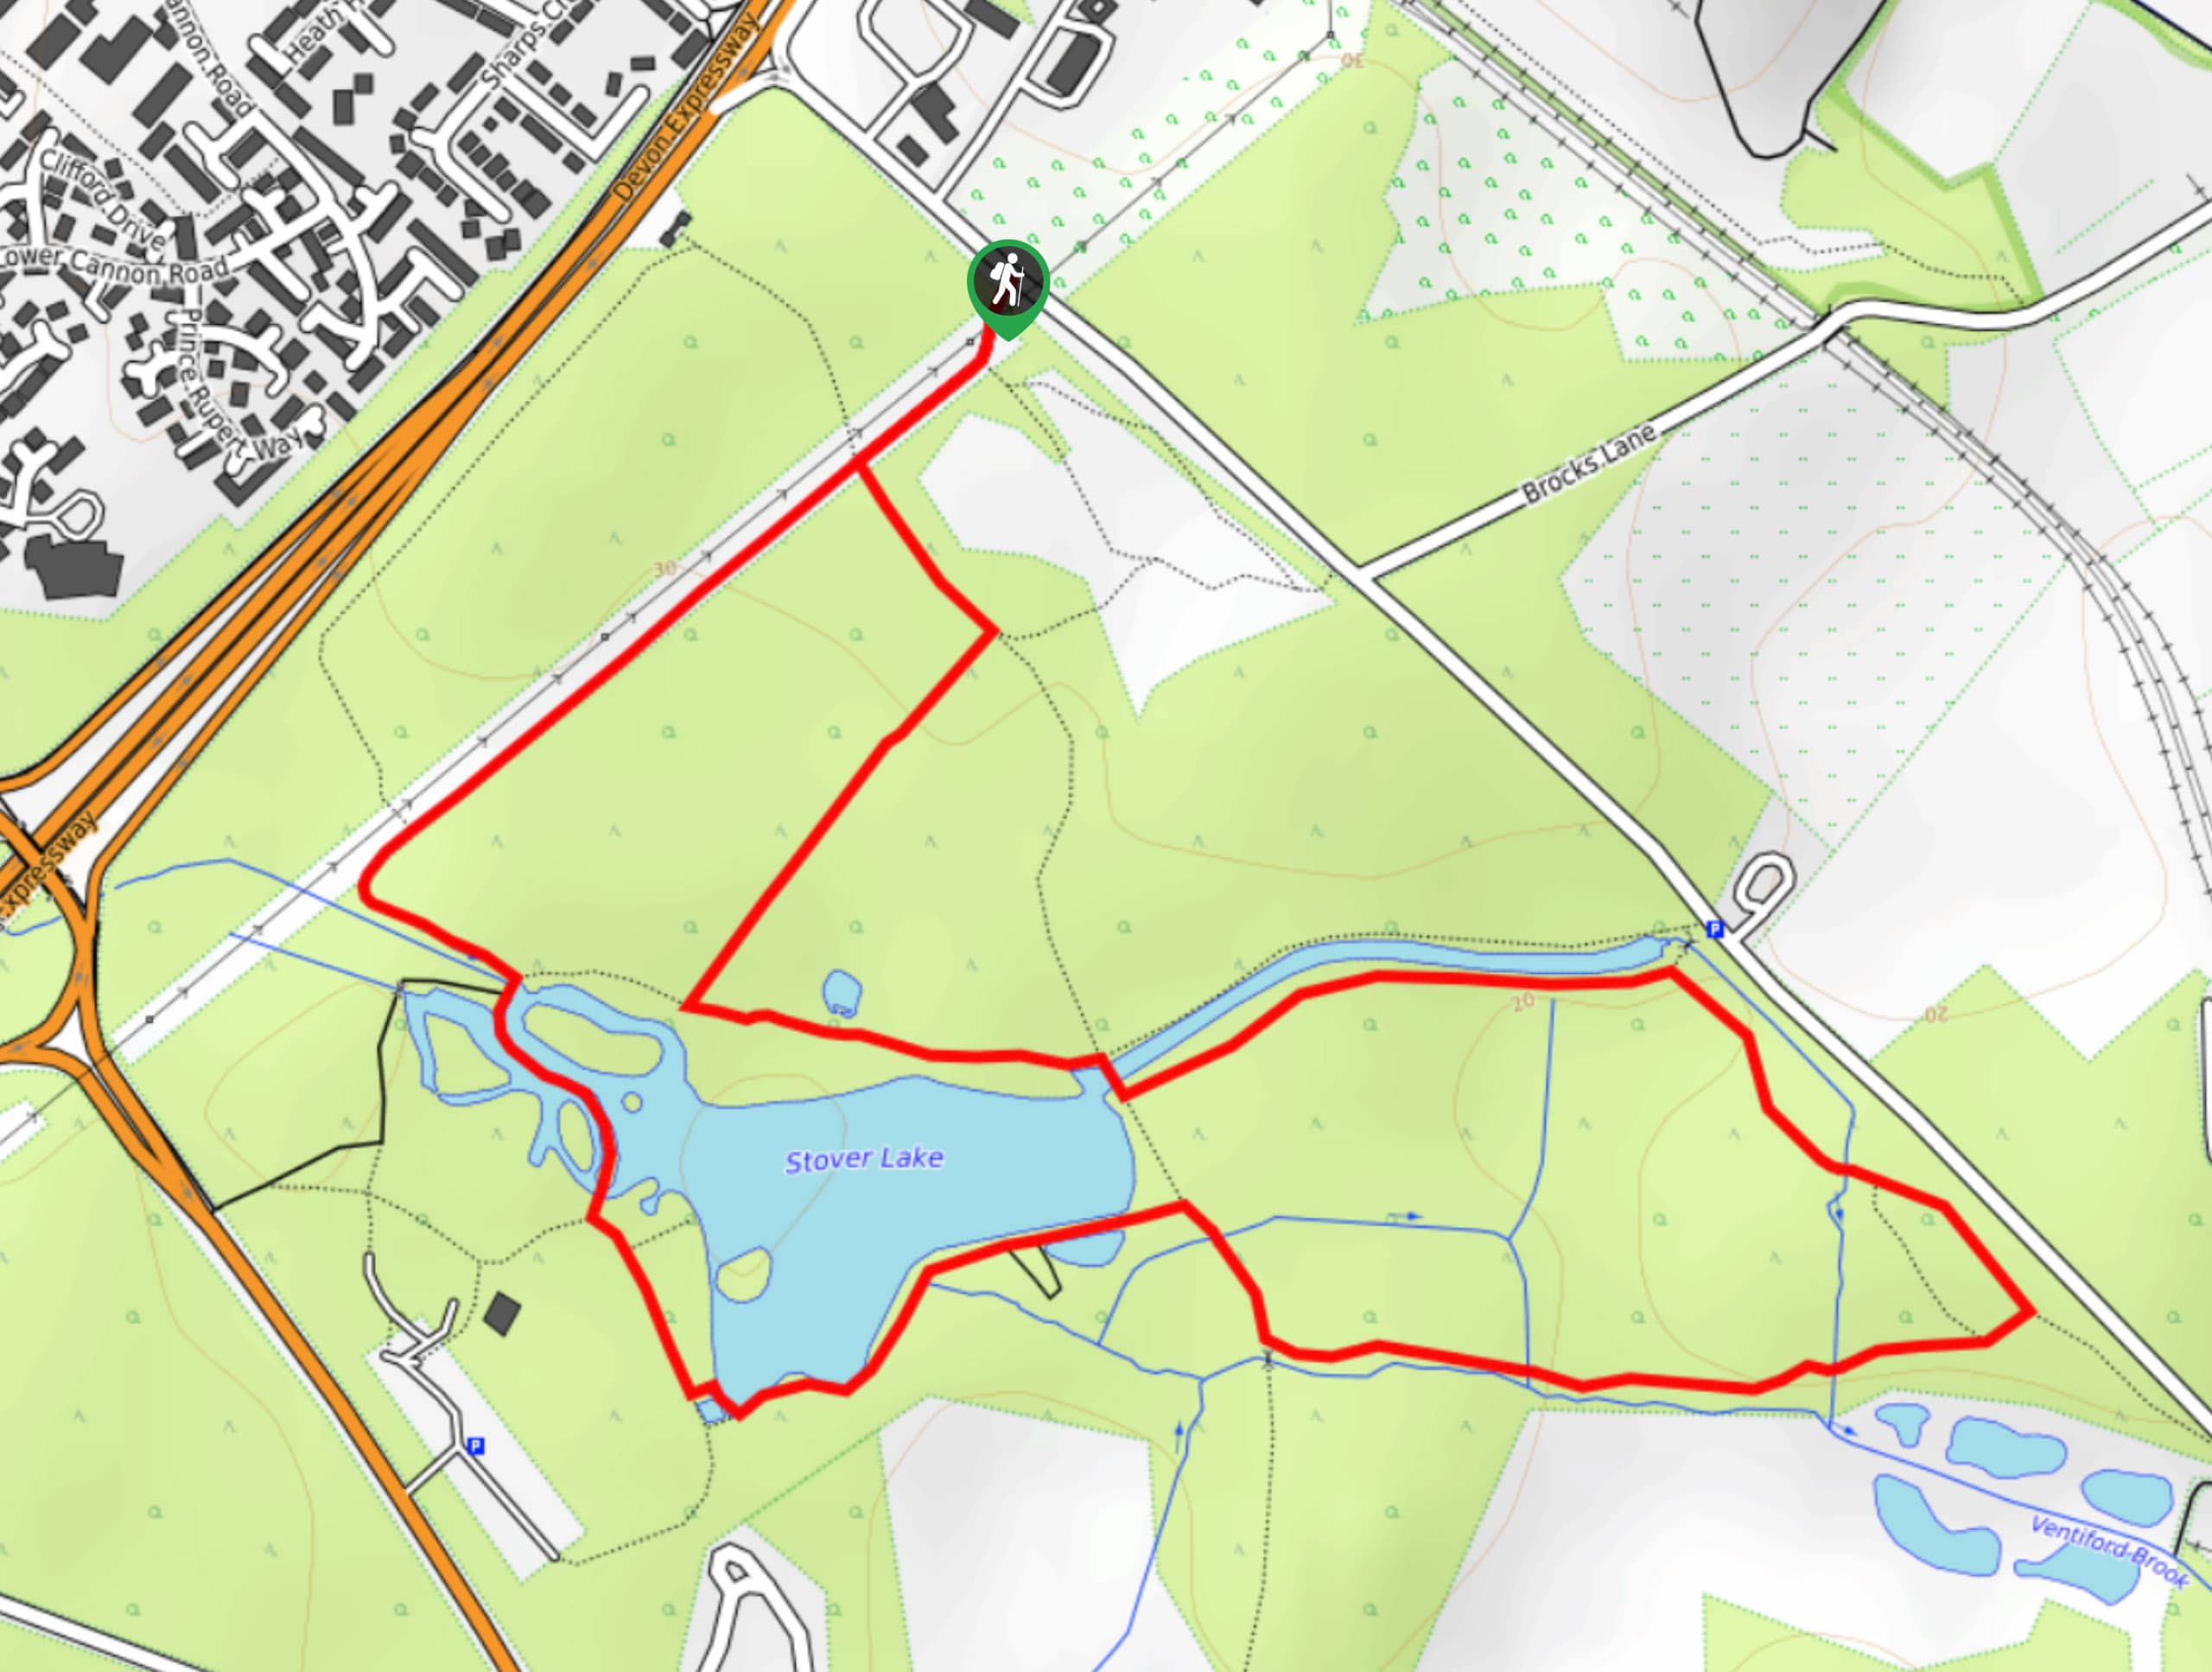 Stover Lake Circular Walk Map